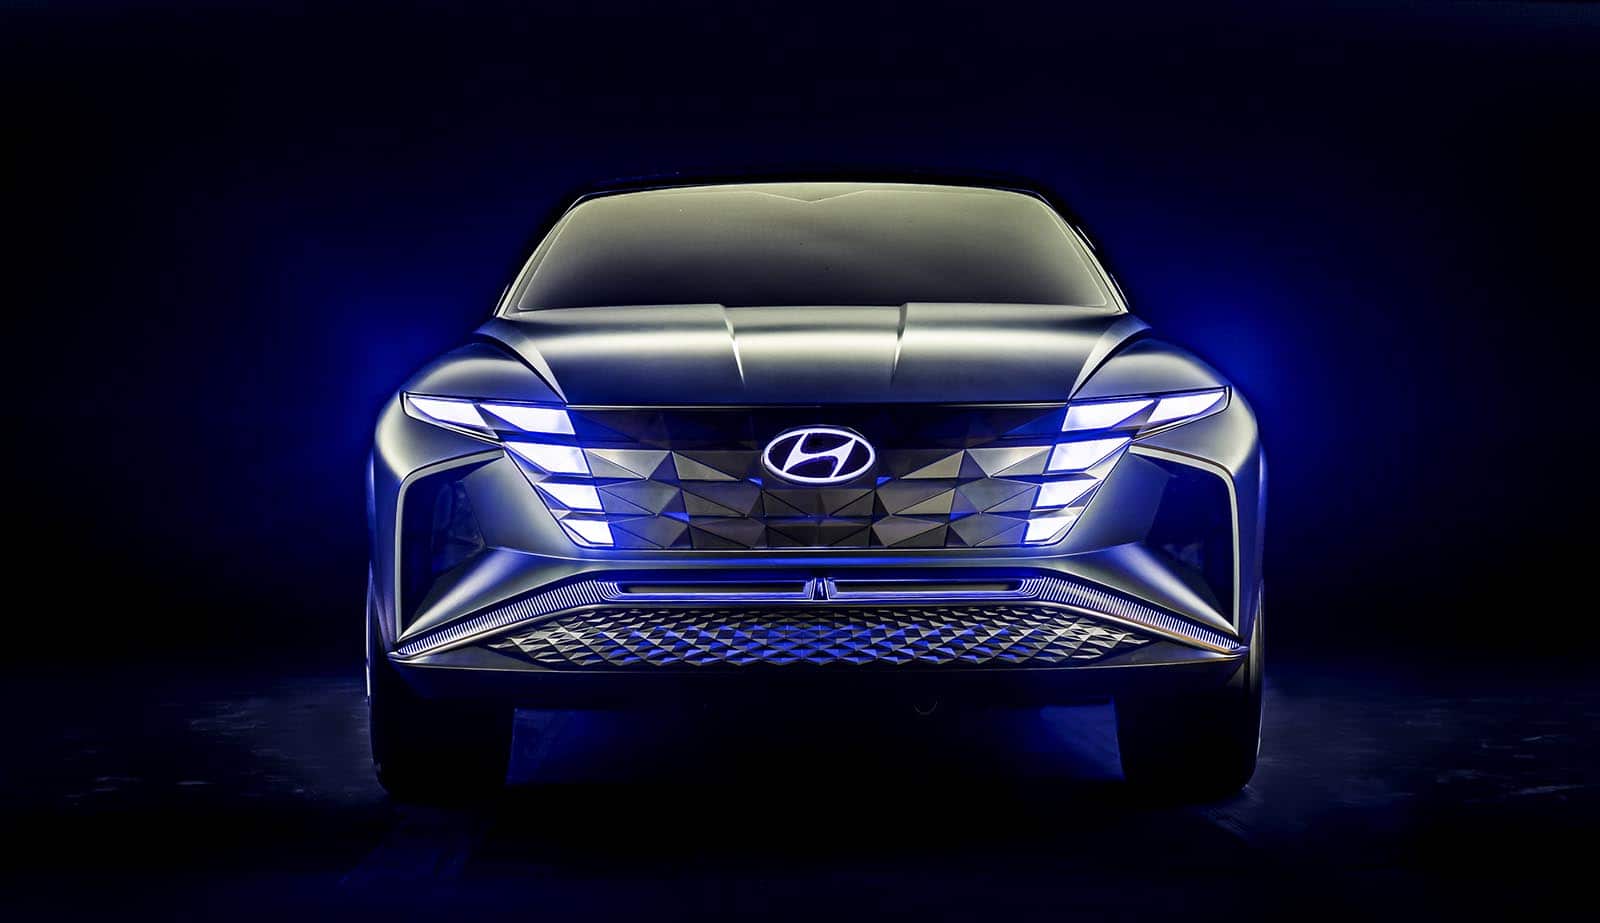 Hyundai Vision T Offers a Glimpse of the Future - The Detroit Bureau